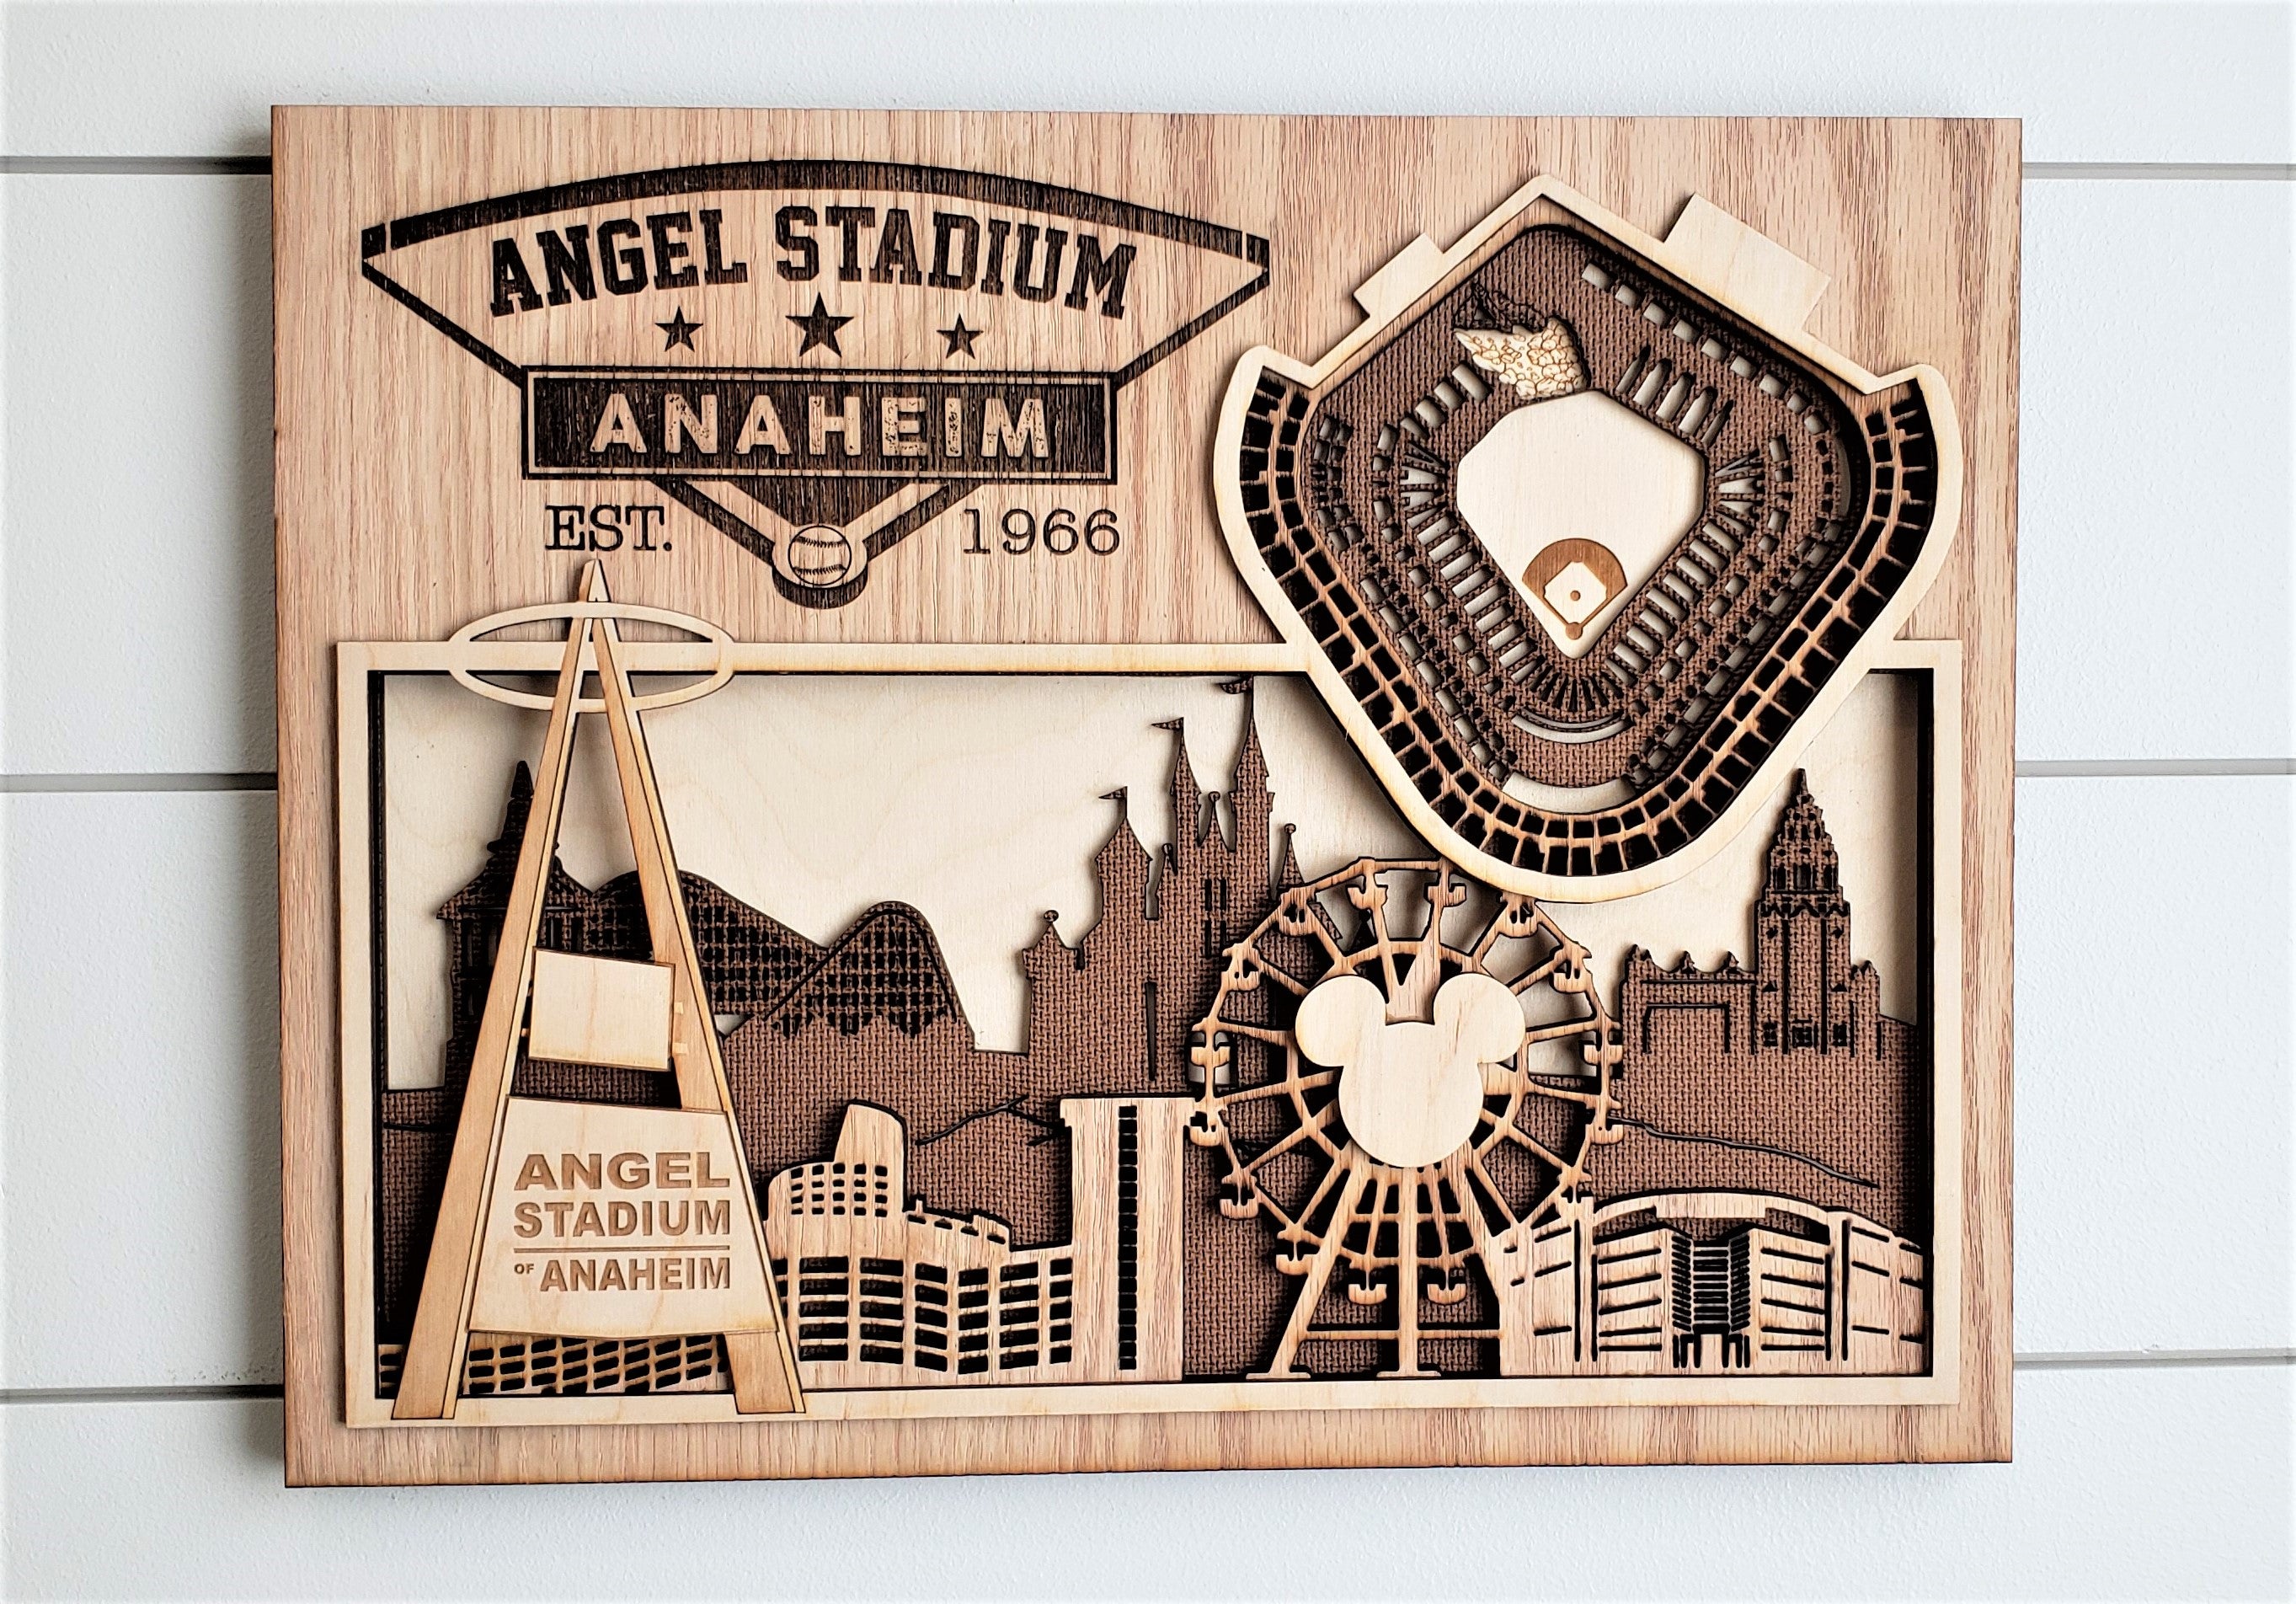 Angel Stadium - Home of the Los Angeles Angels